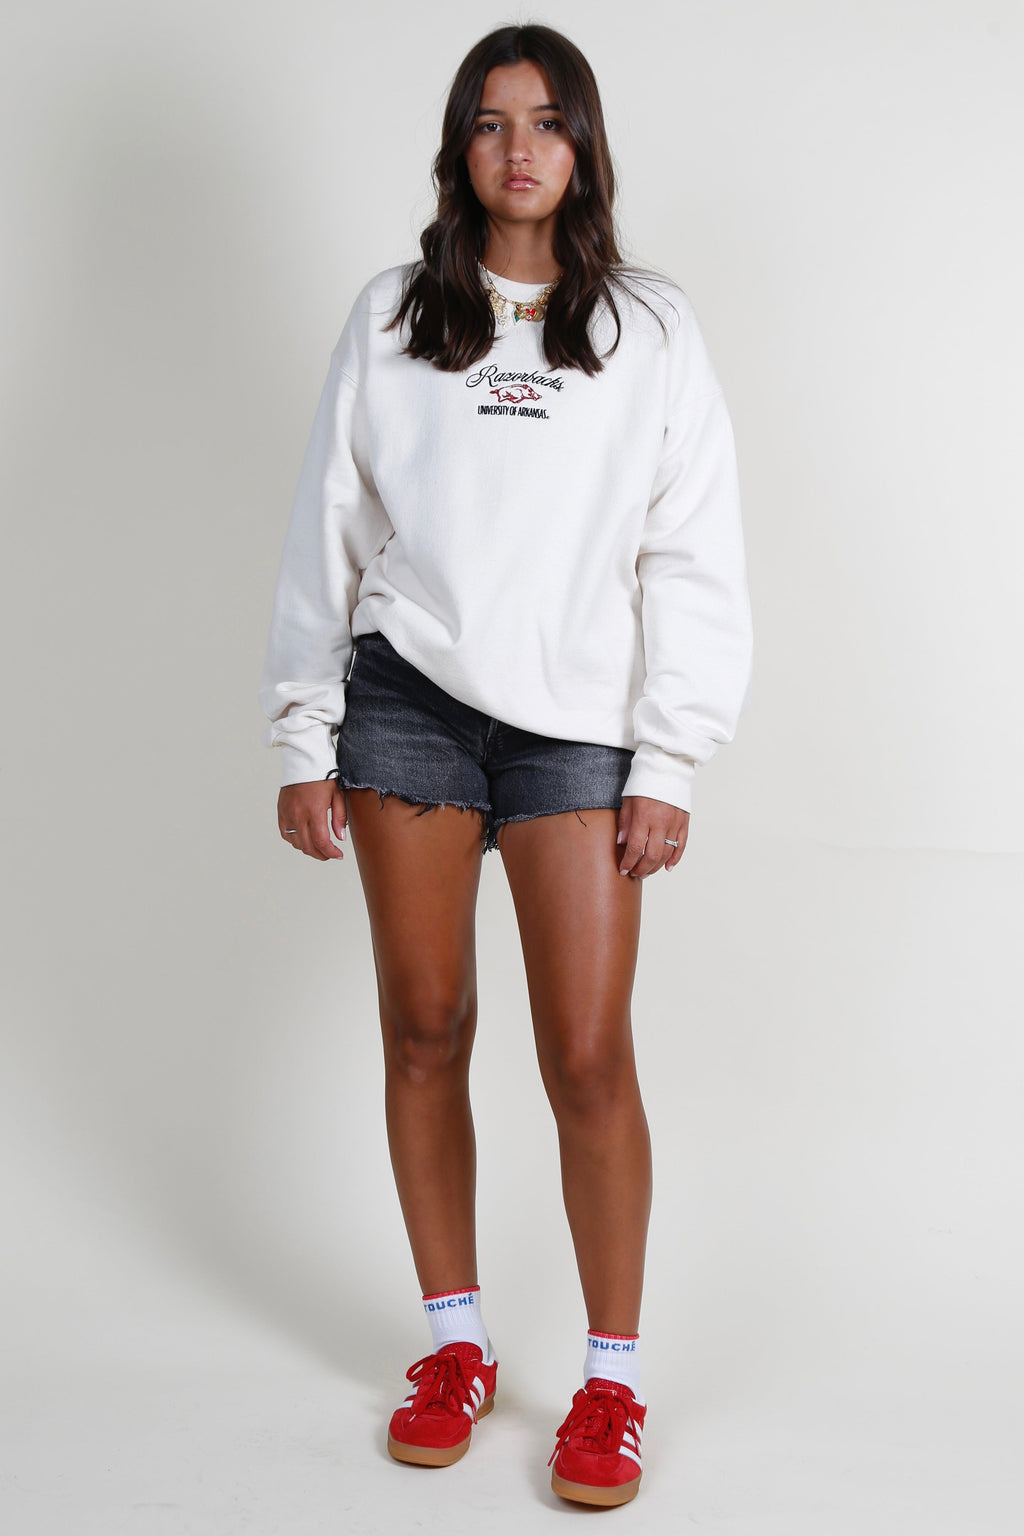 AR Razorbacks Embroidered Sweatshirt - Cream